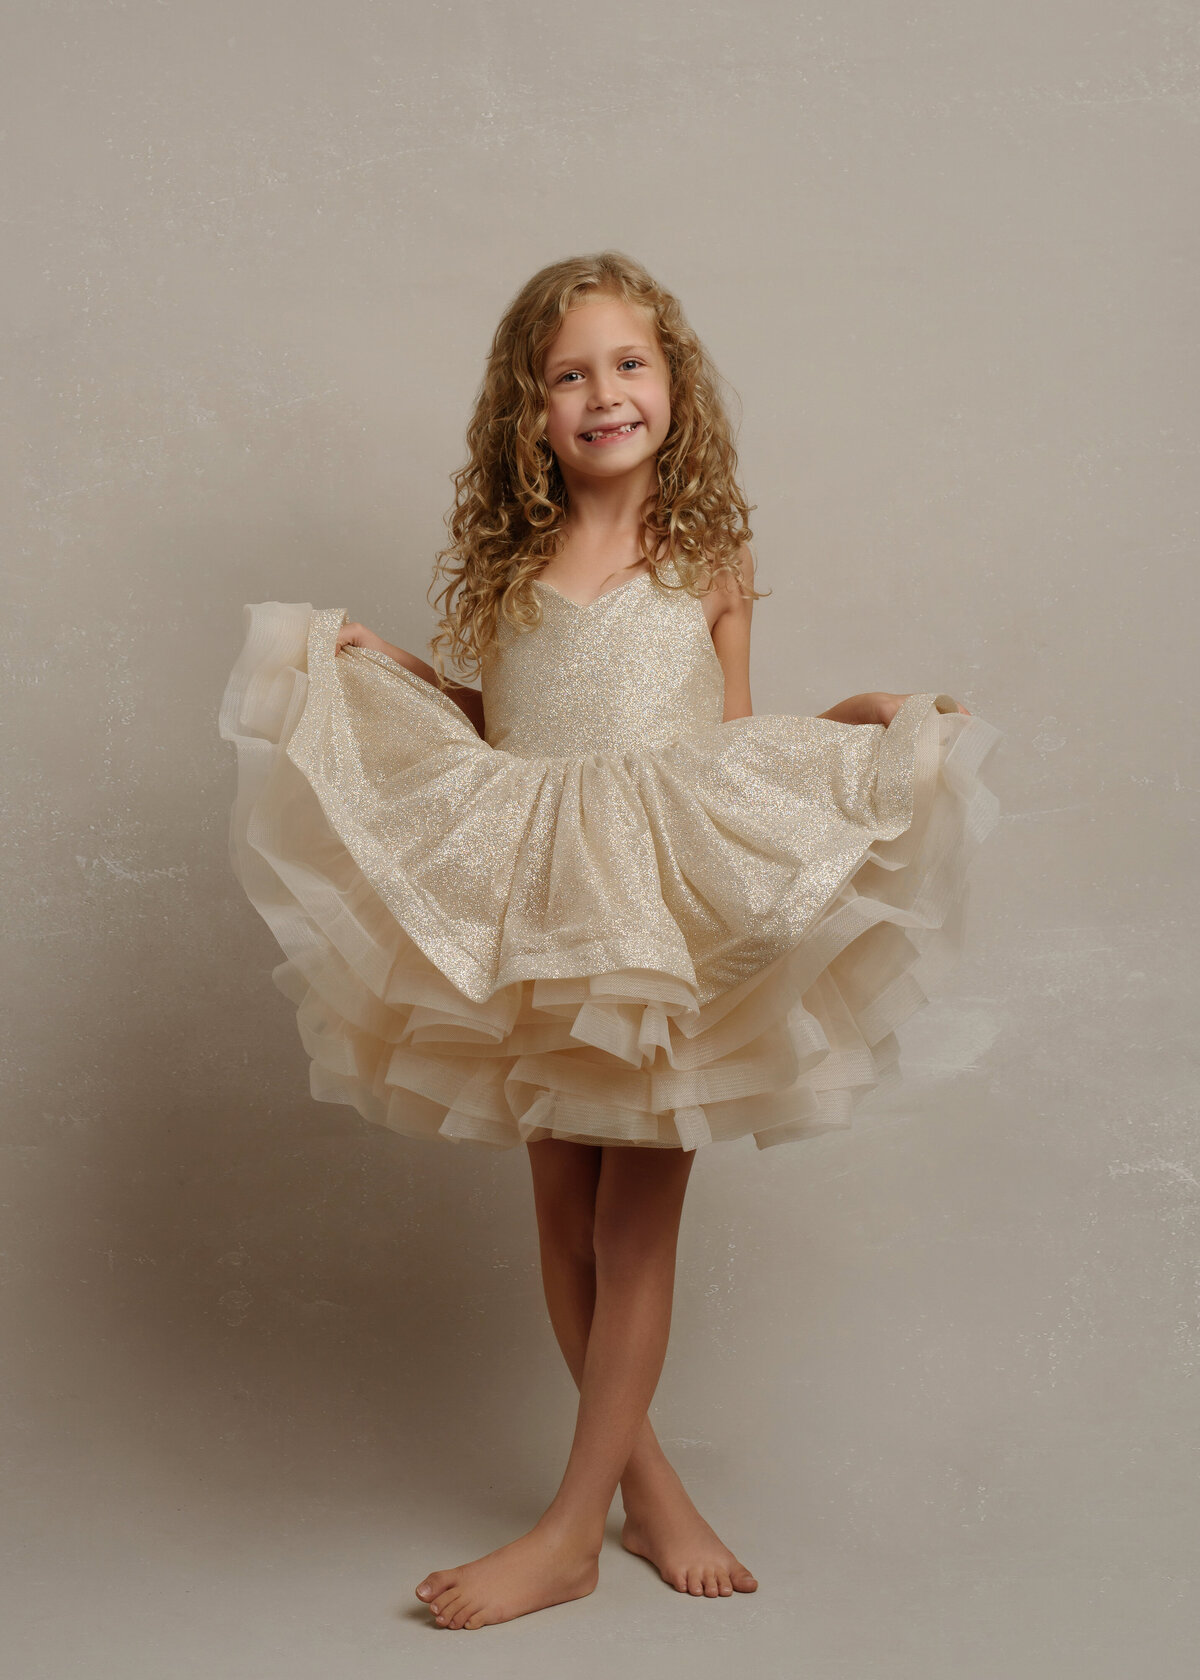 Sibling photo of little girl in tutu dress